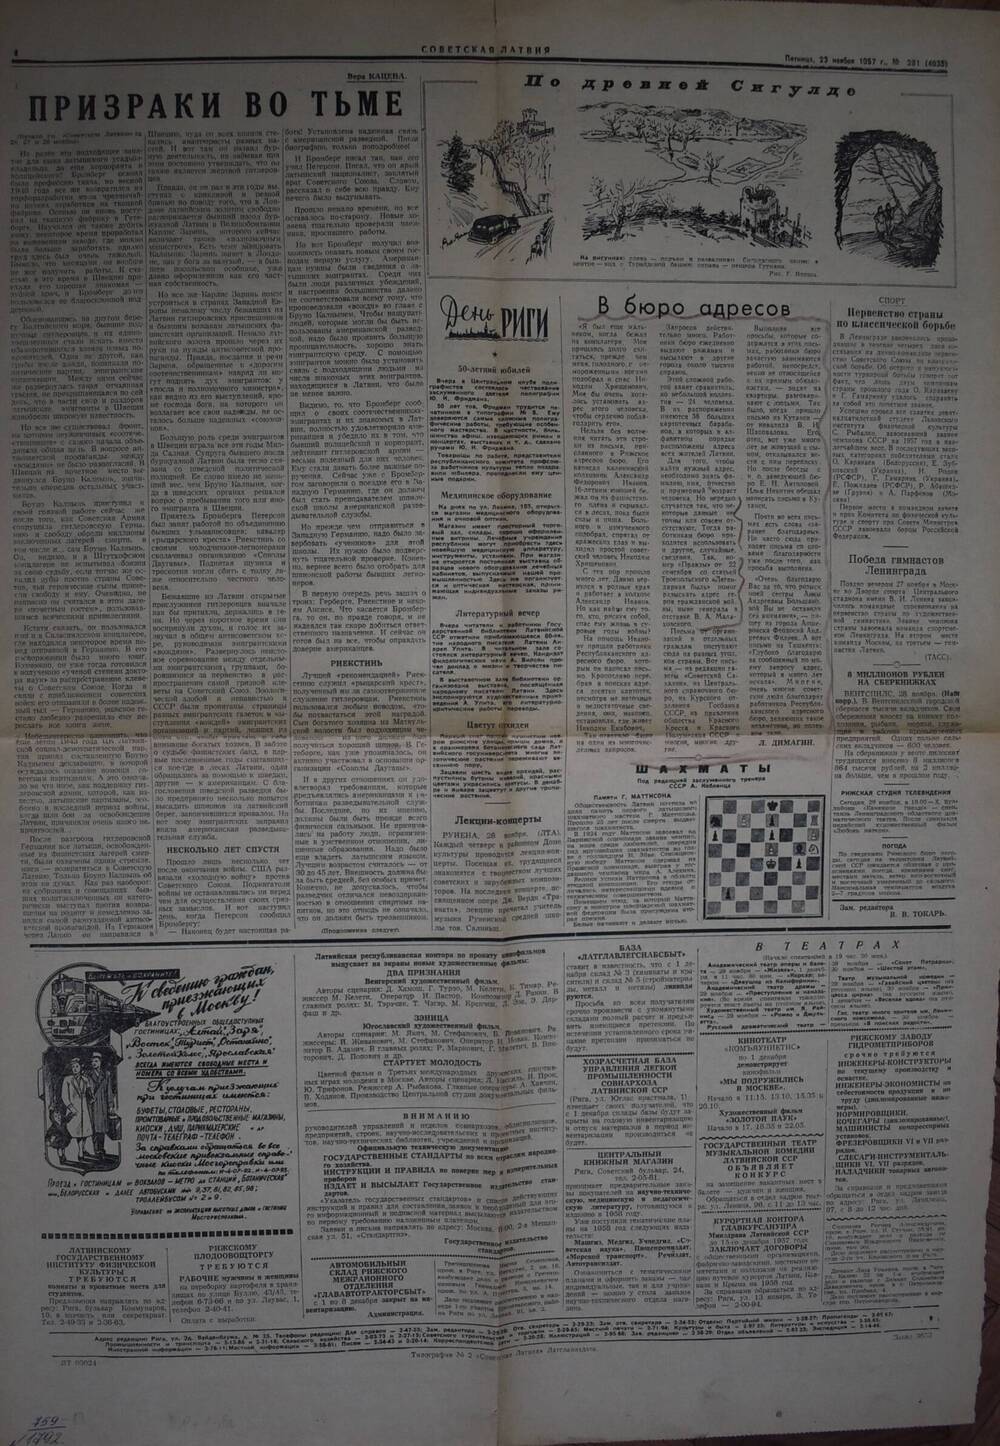 Газета Советская Латвия от 29.11.1957 г.